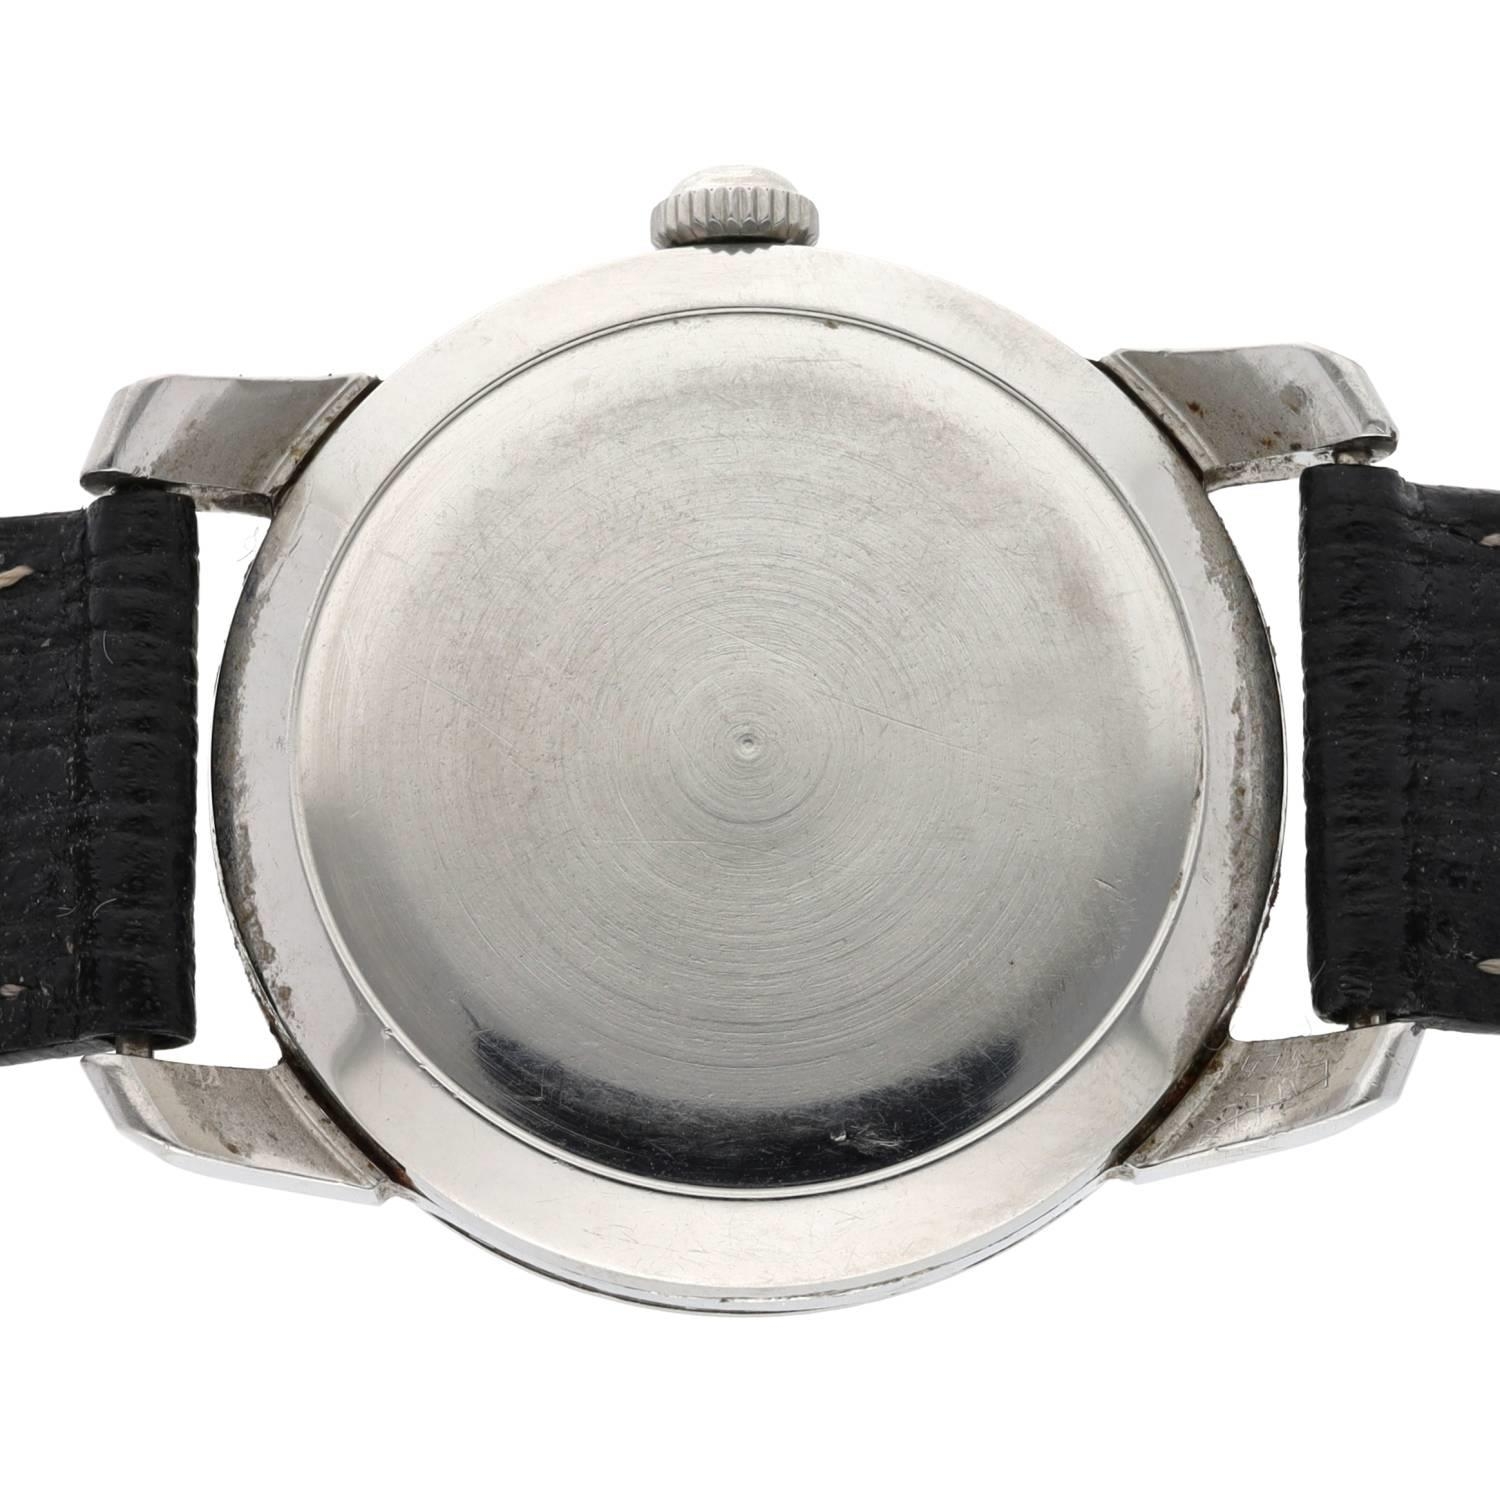 Omega Seamaster stainless steel gentleman's wristwatch, case no. 910, serial no. 15712xxx, circa - Image 2 of 2